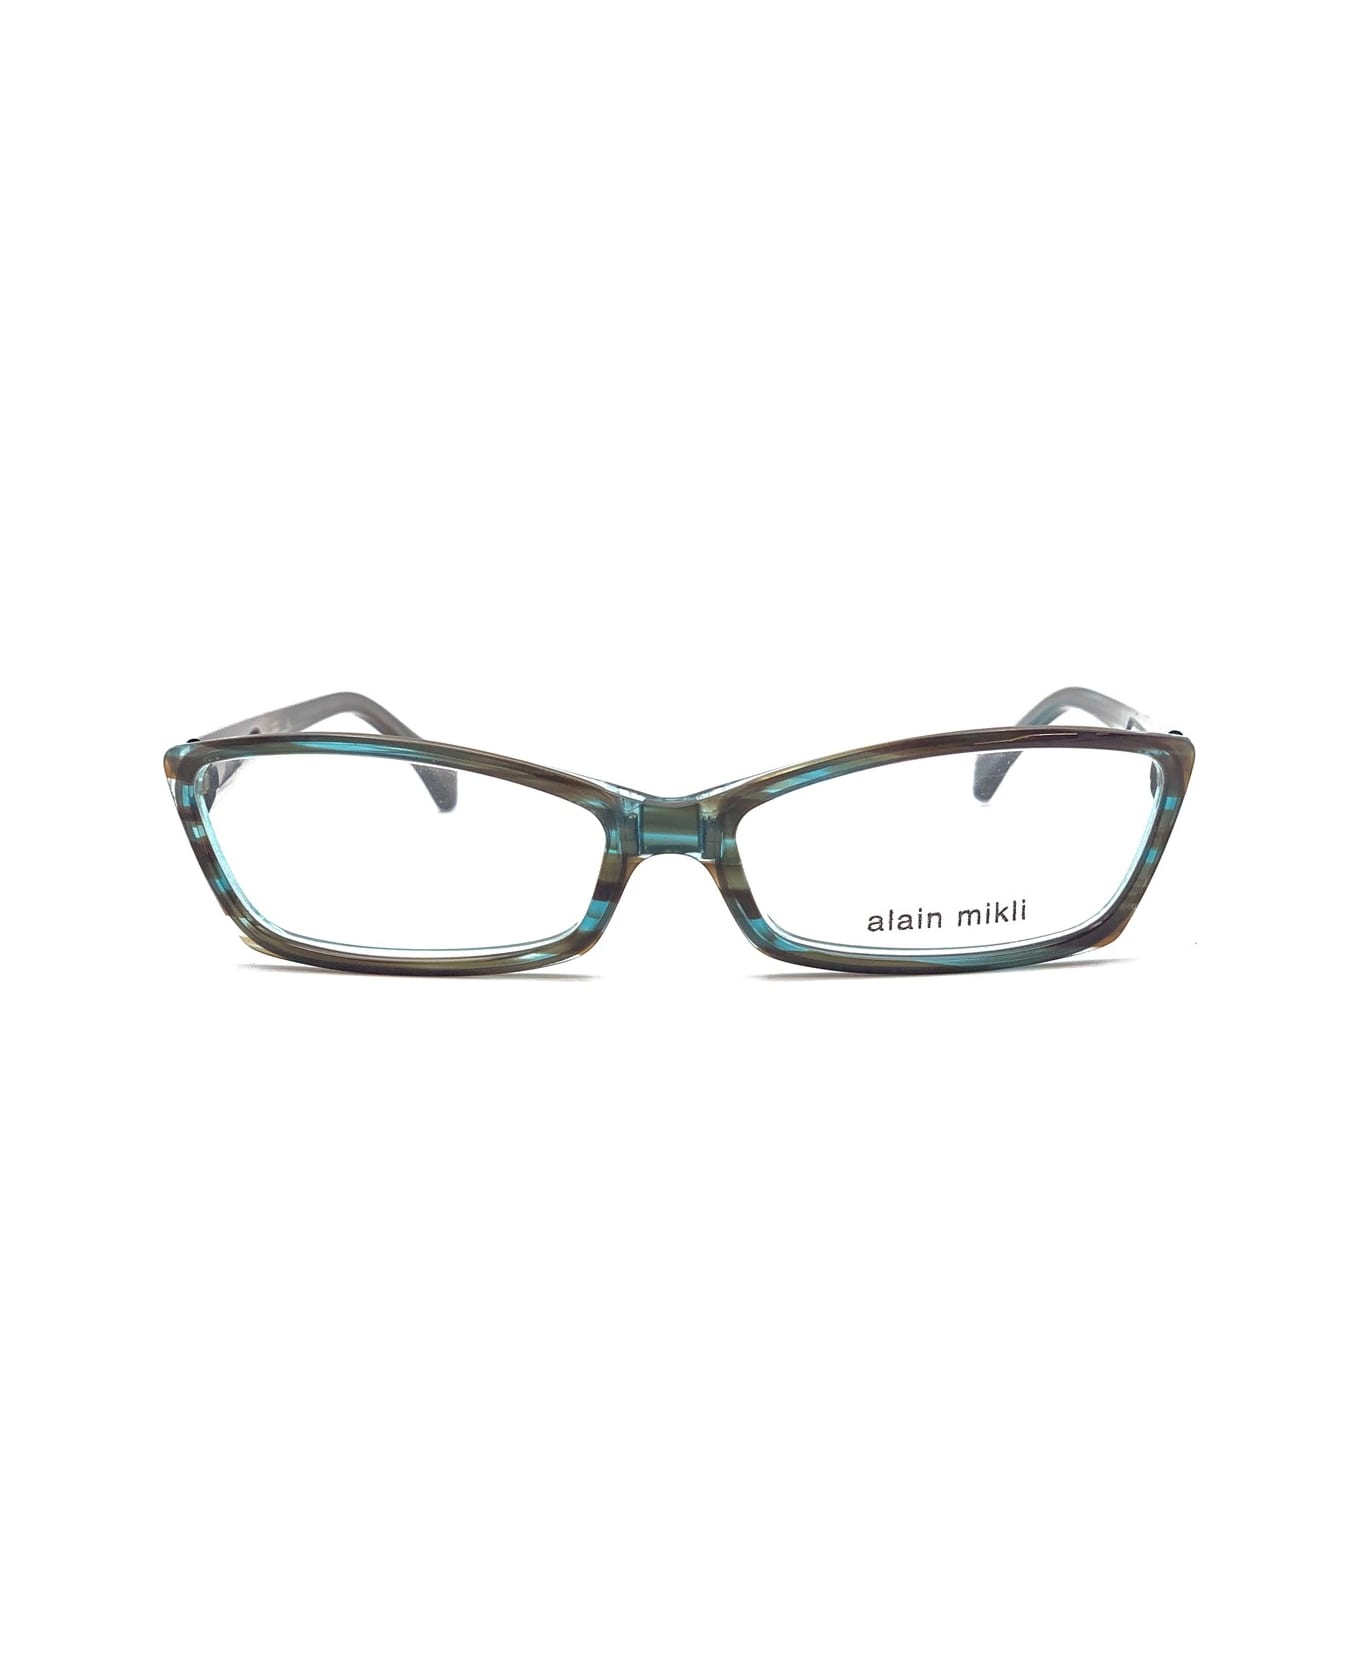 Alain Mikli A013 Glasses - Verde